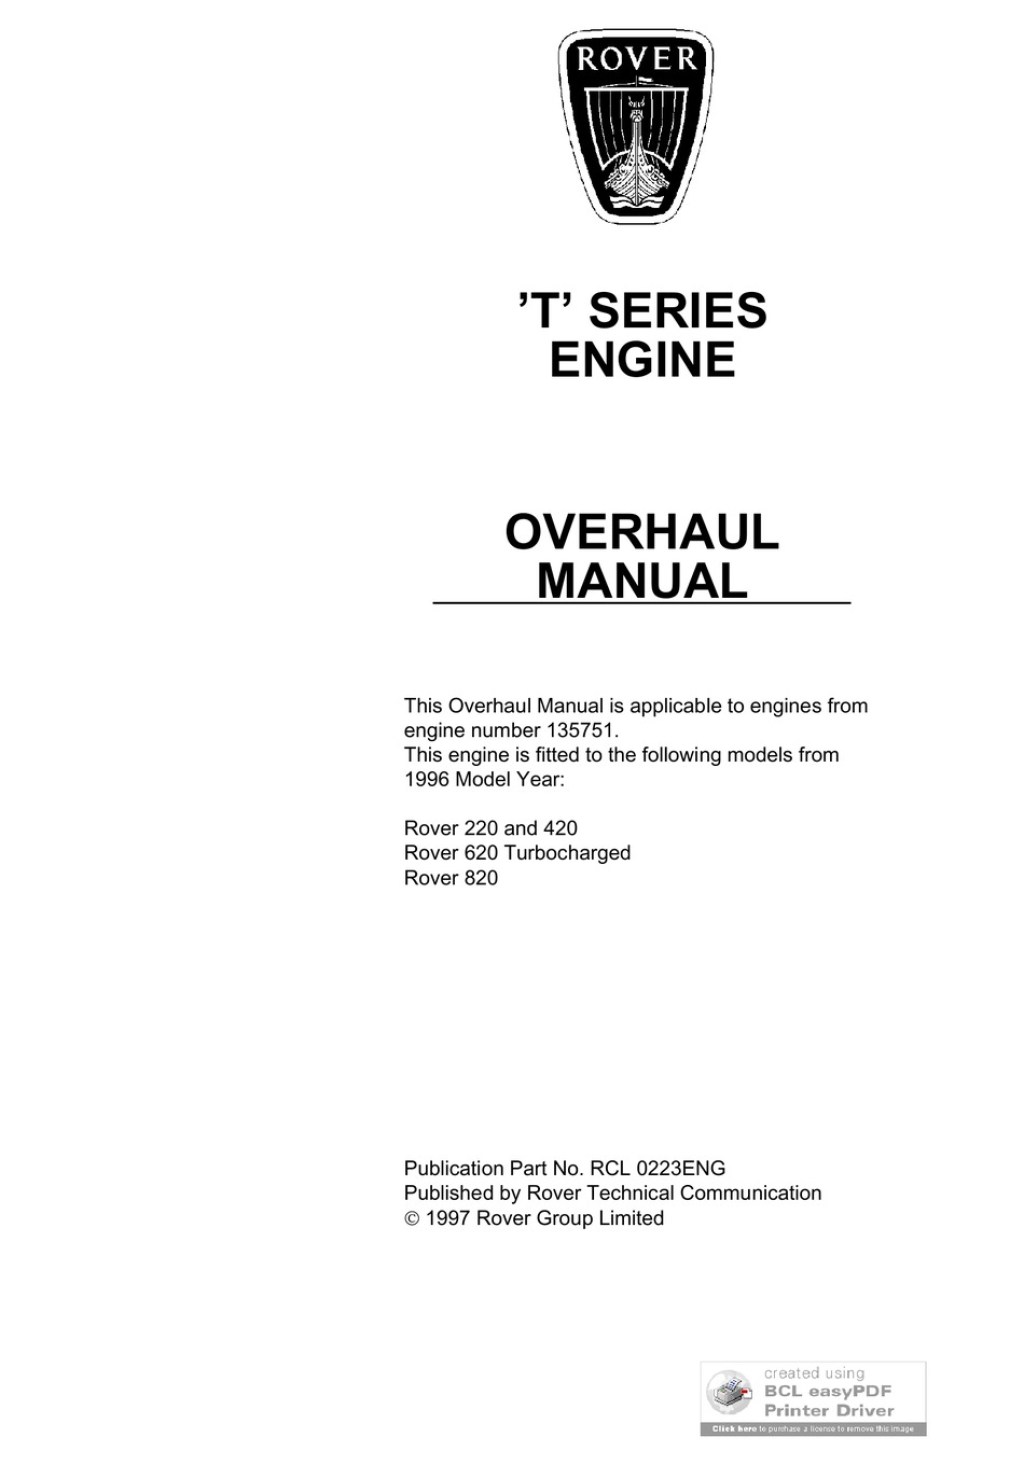 Picture of: ROVER T SERIES OVERHAUL MANUAL Pdf Download  ManualsLib